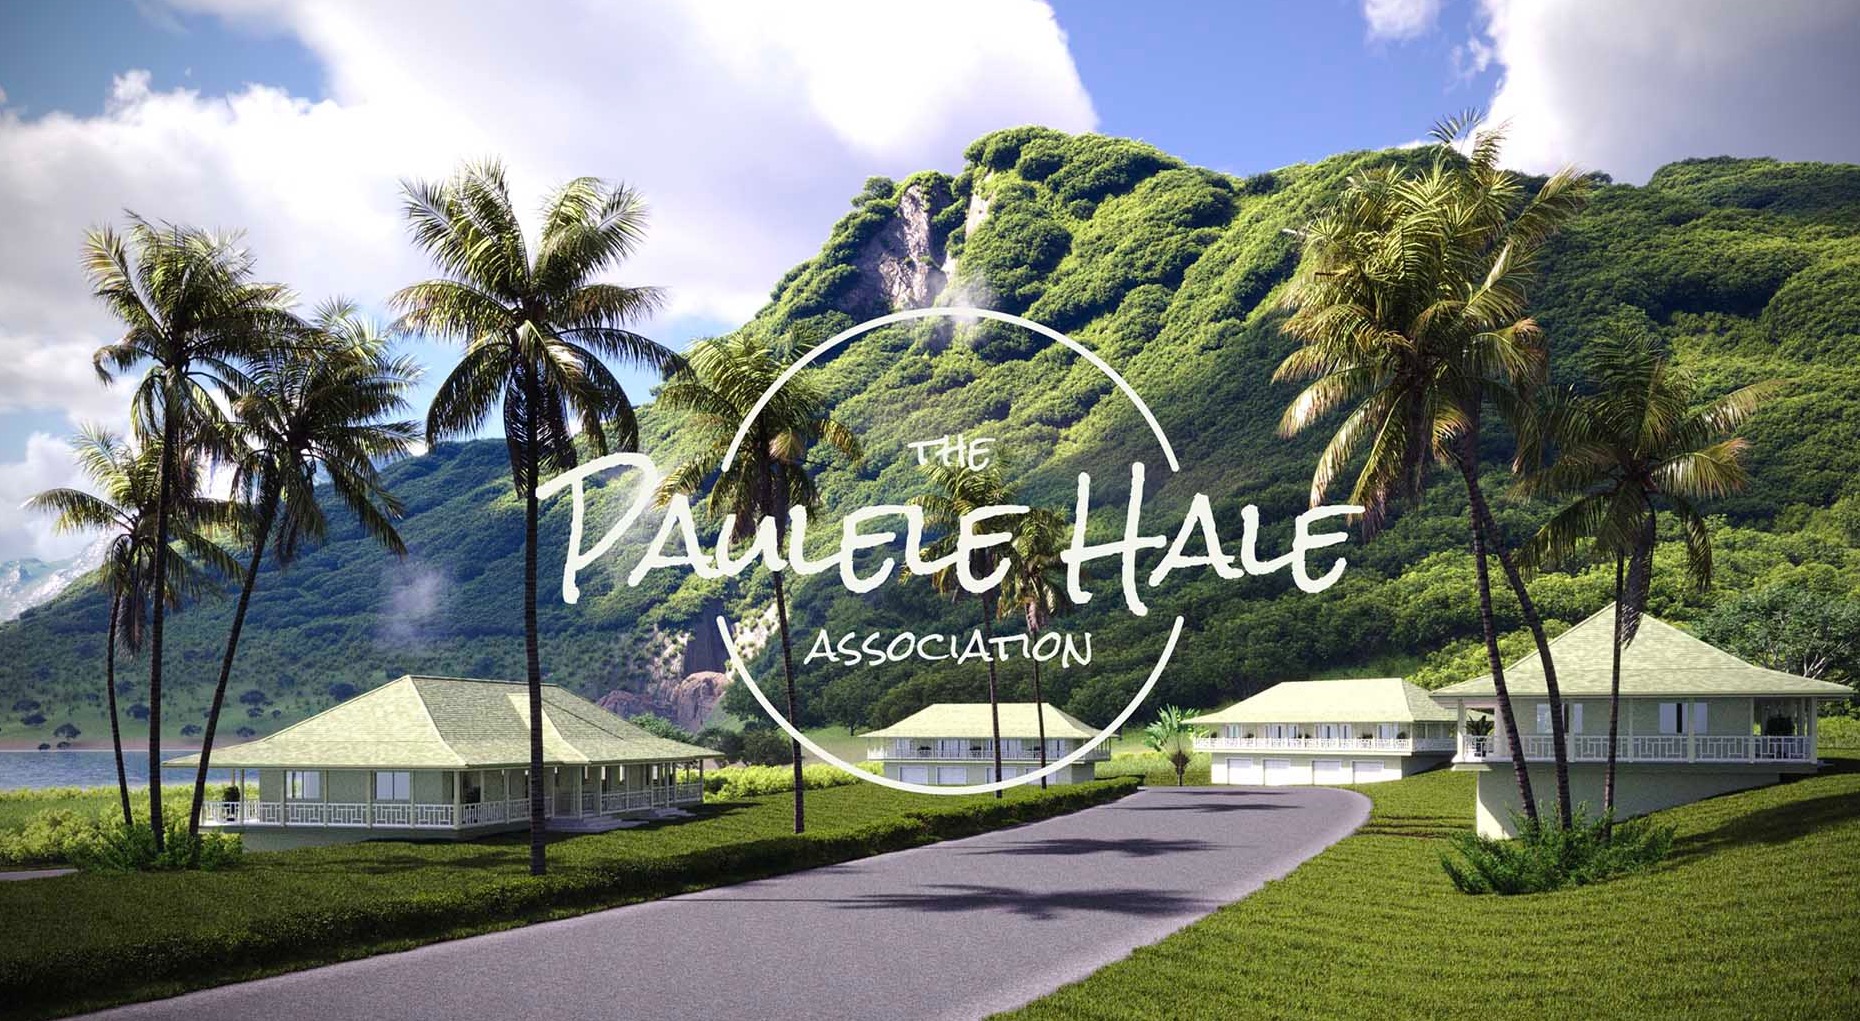 The Paulele Hale Association, Corp logo